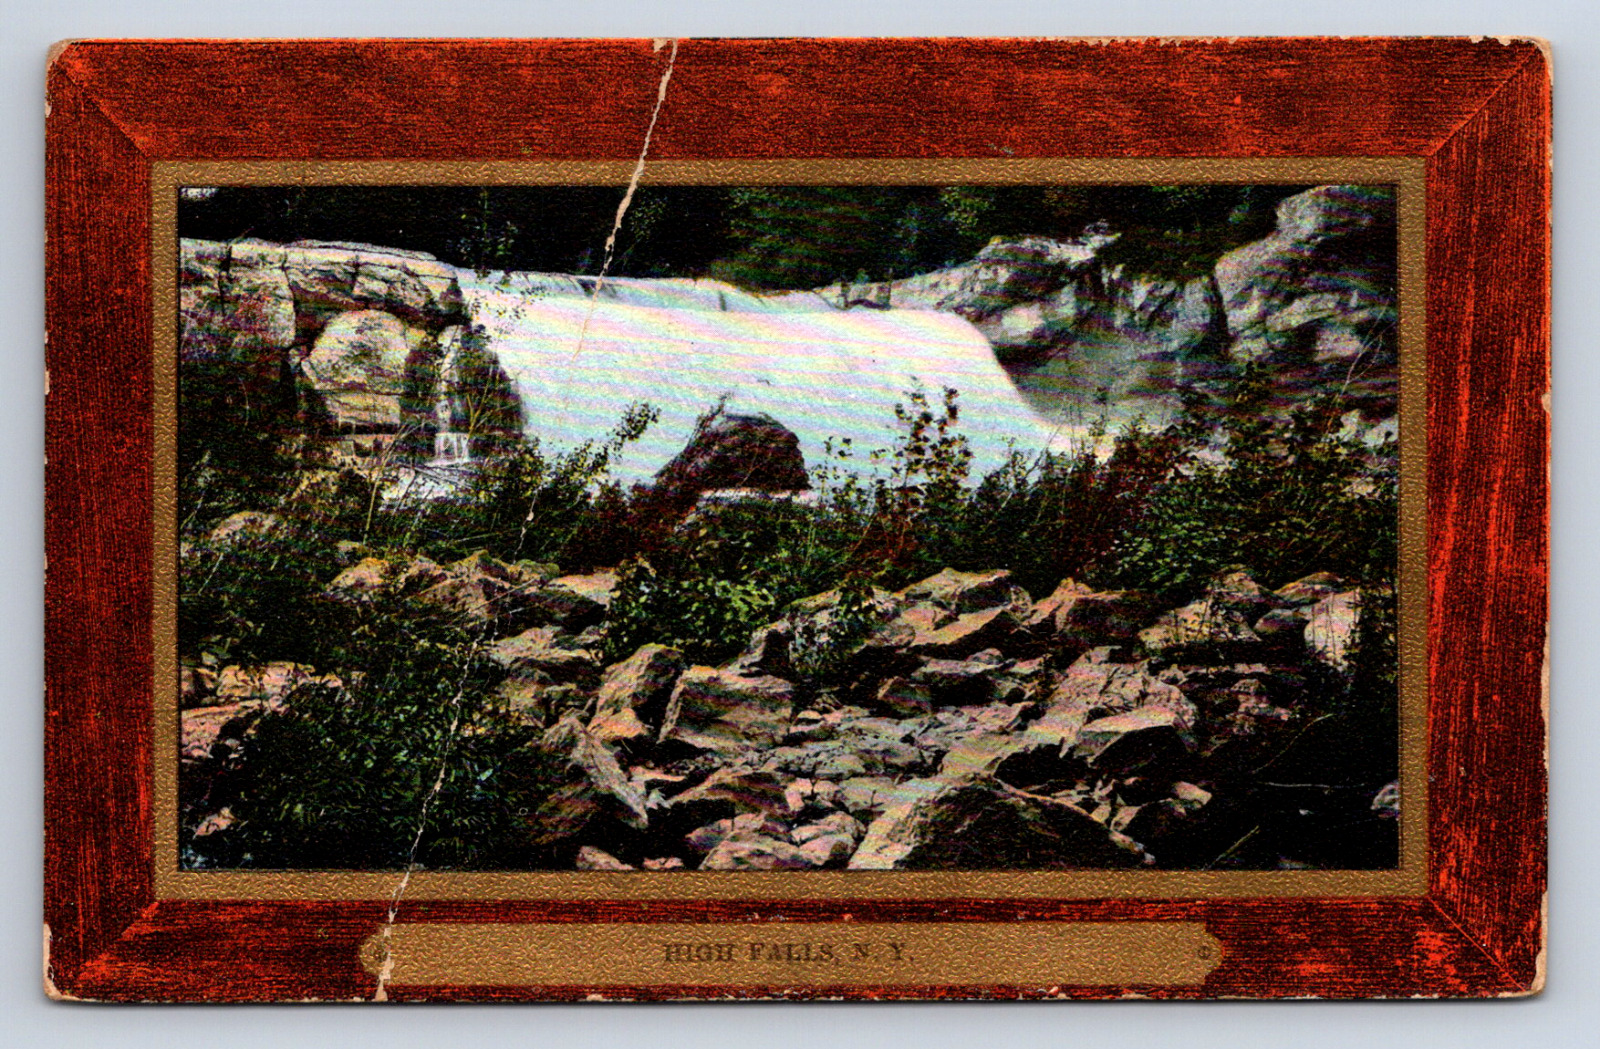 Vintage Postcard High Falls New York Scenic View